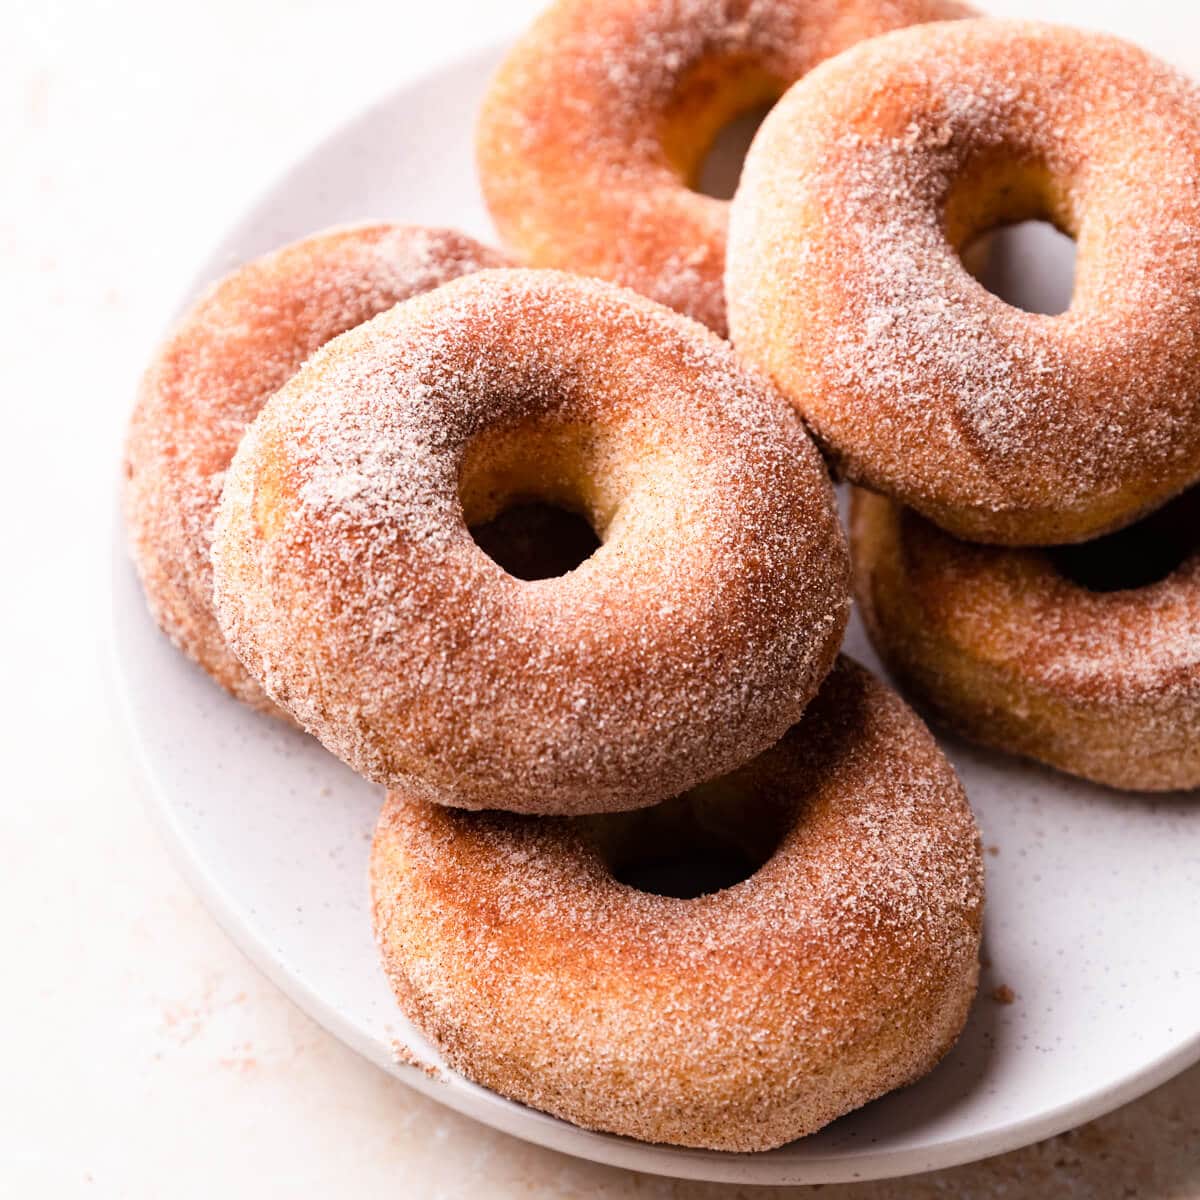 air fried doughnuts with cinnamon sugar coating.